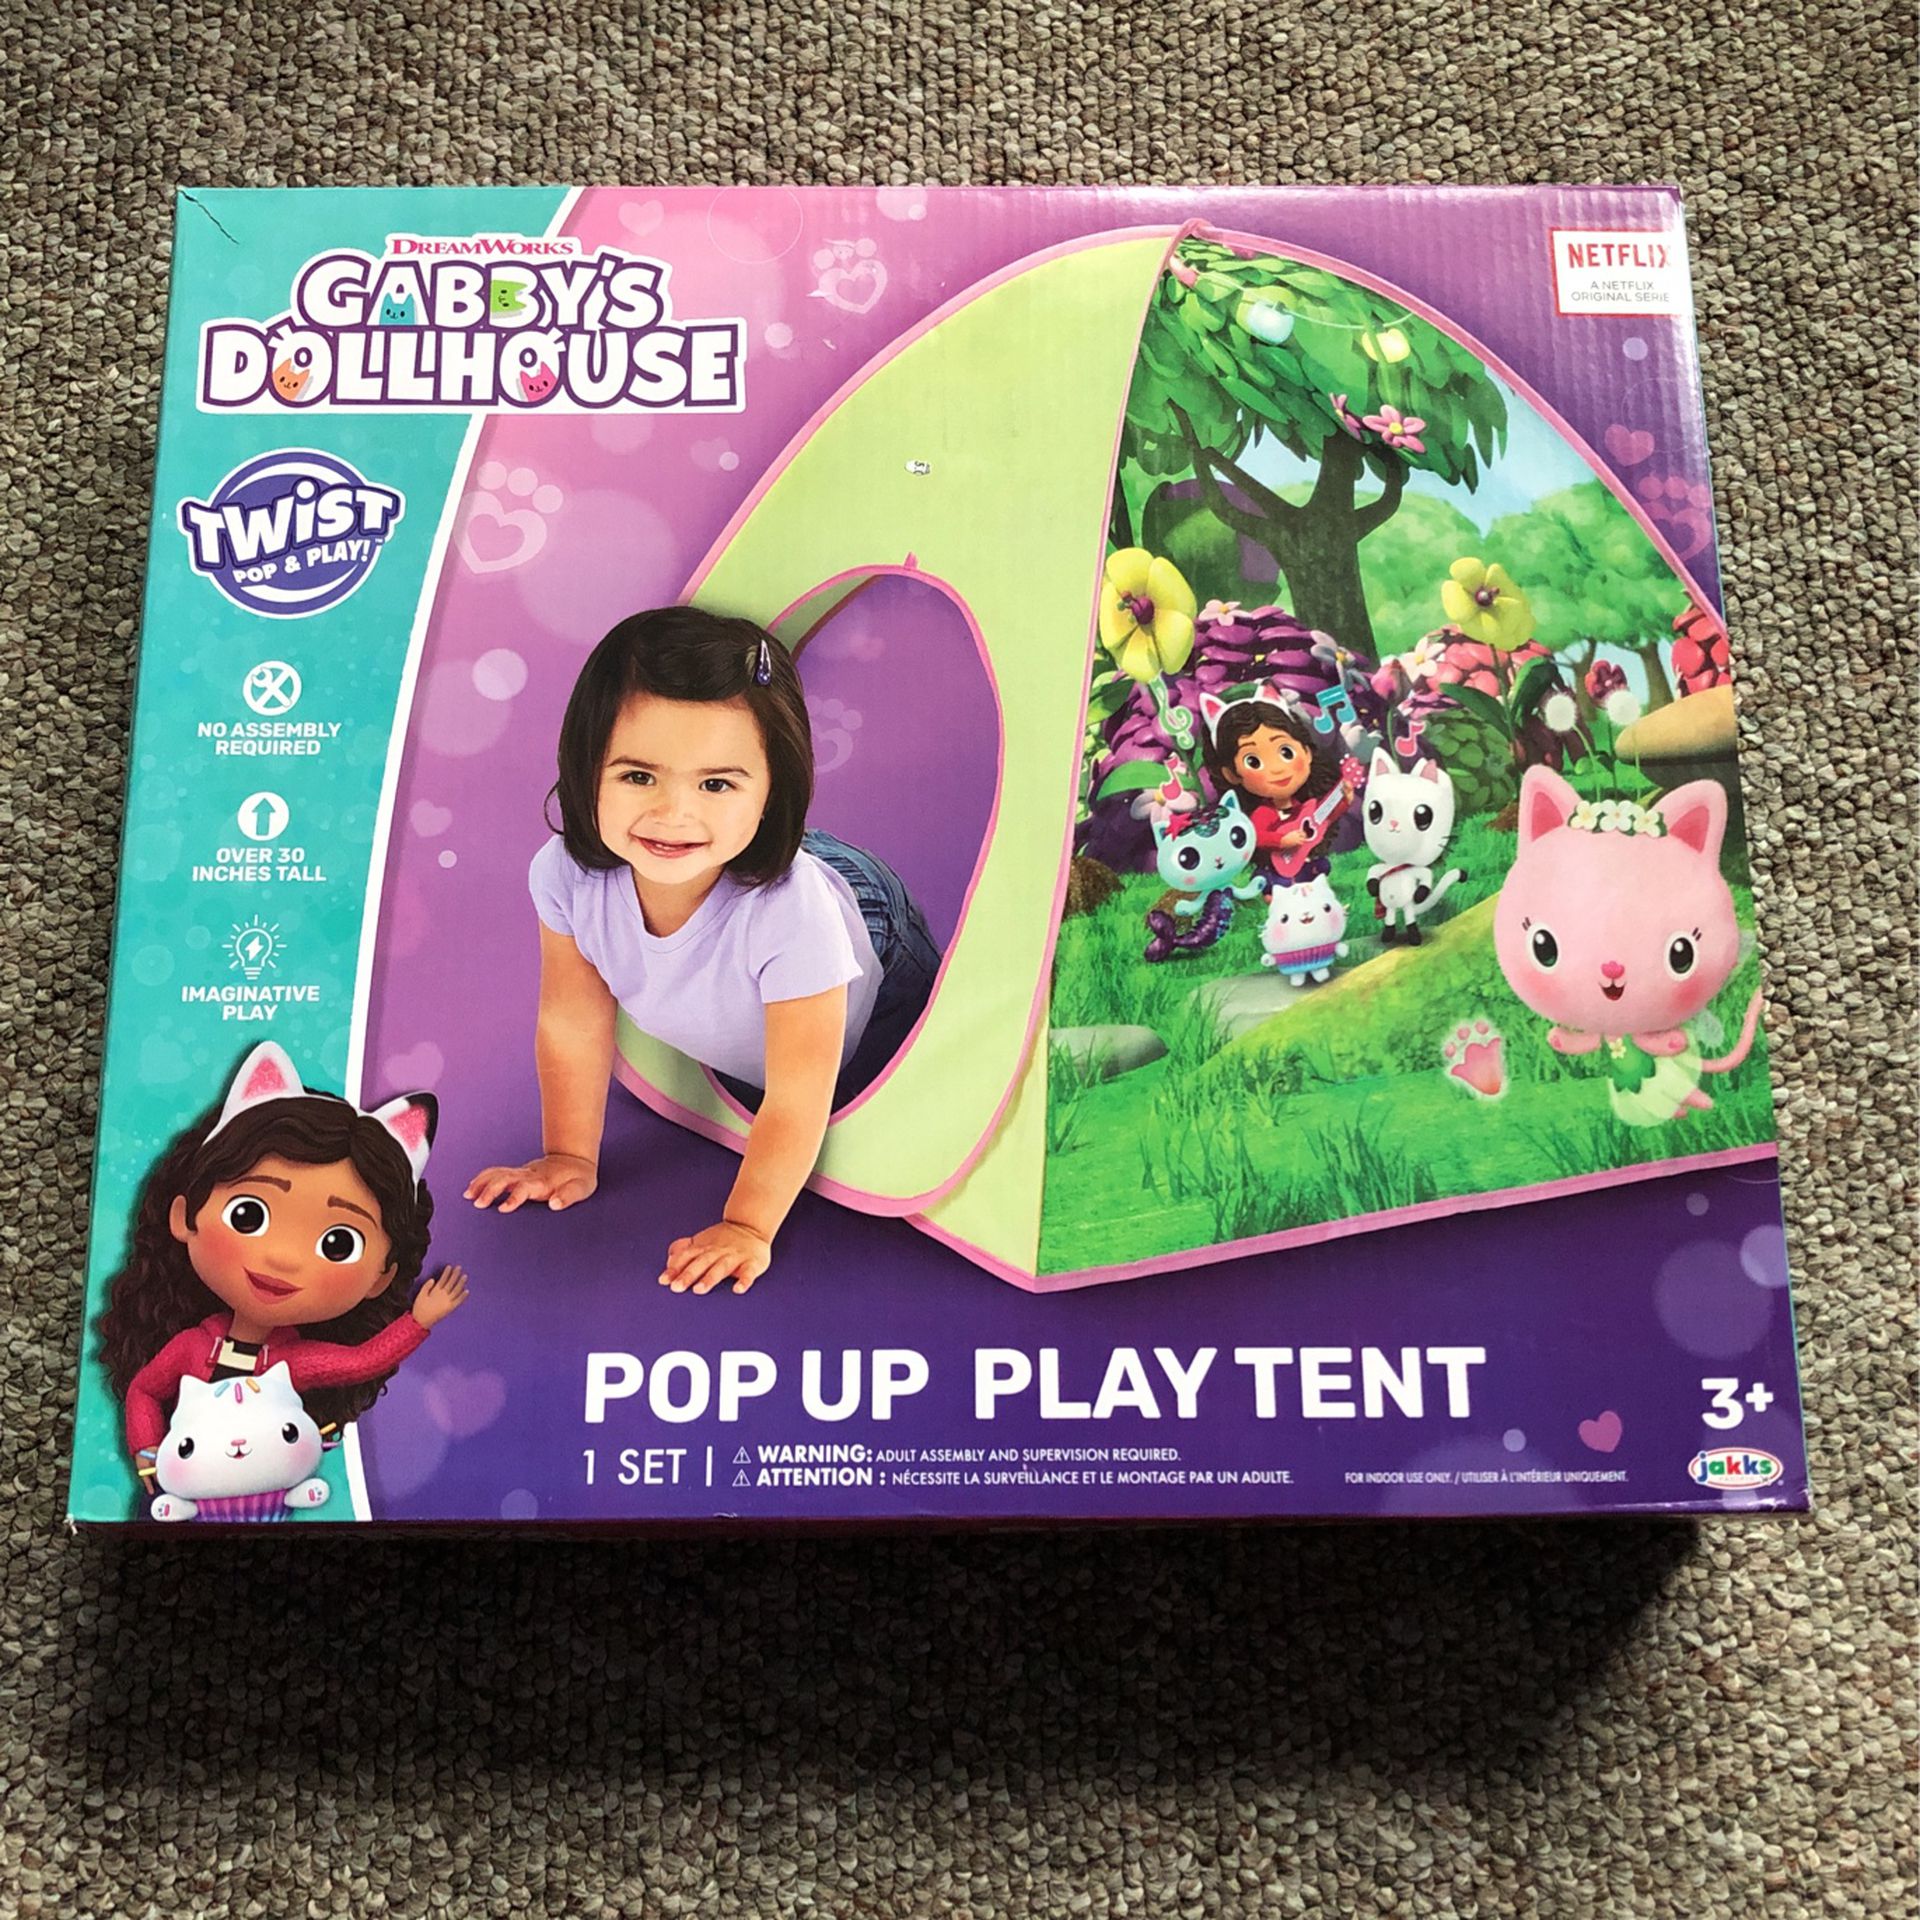 Child’s Play Tent Brand New